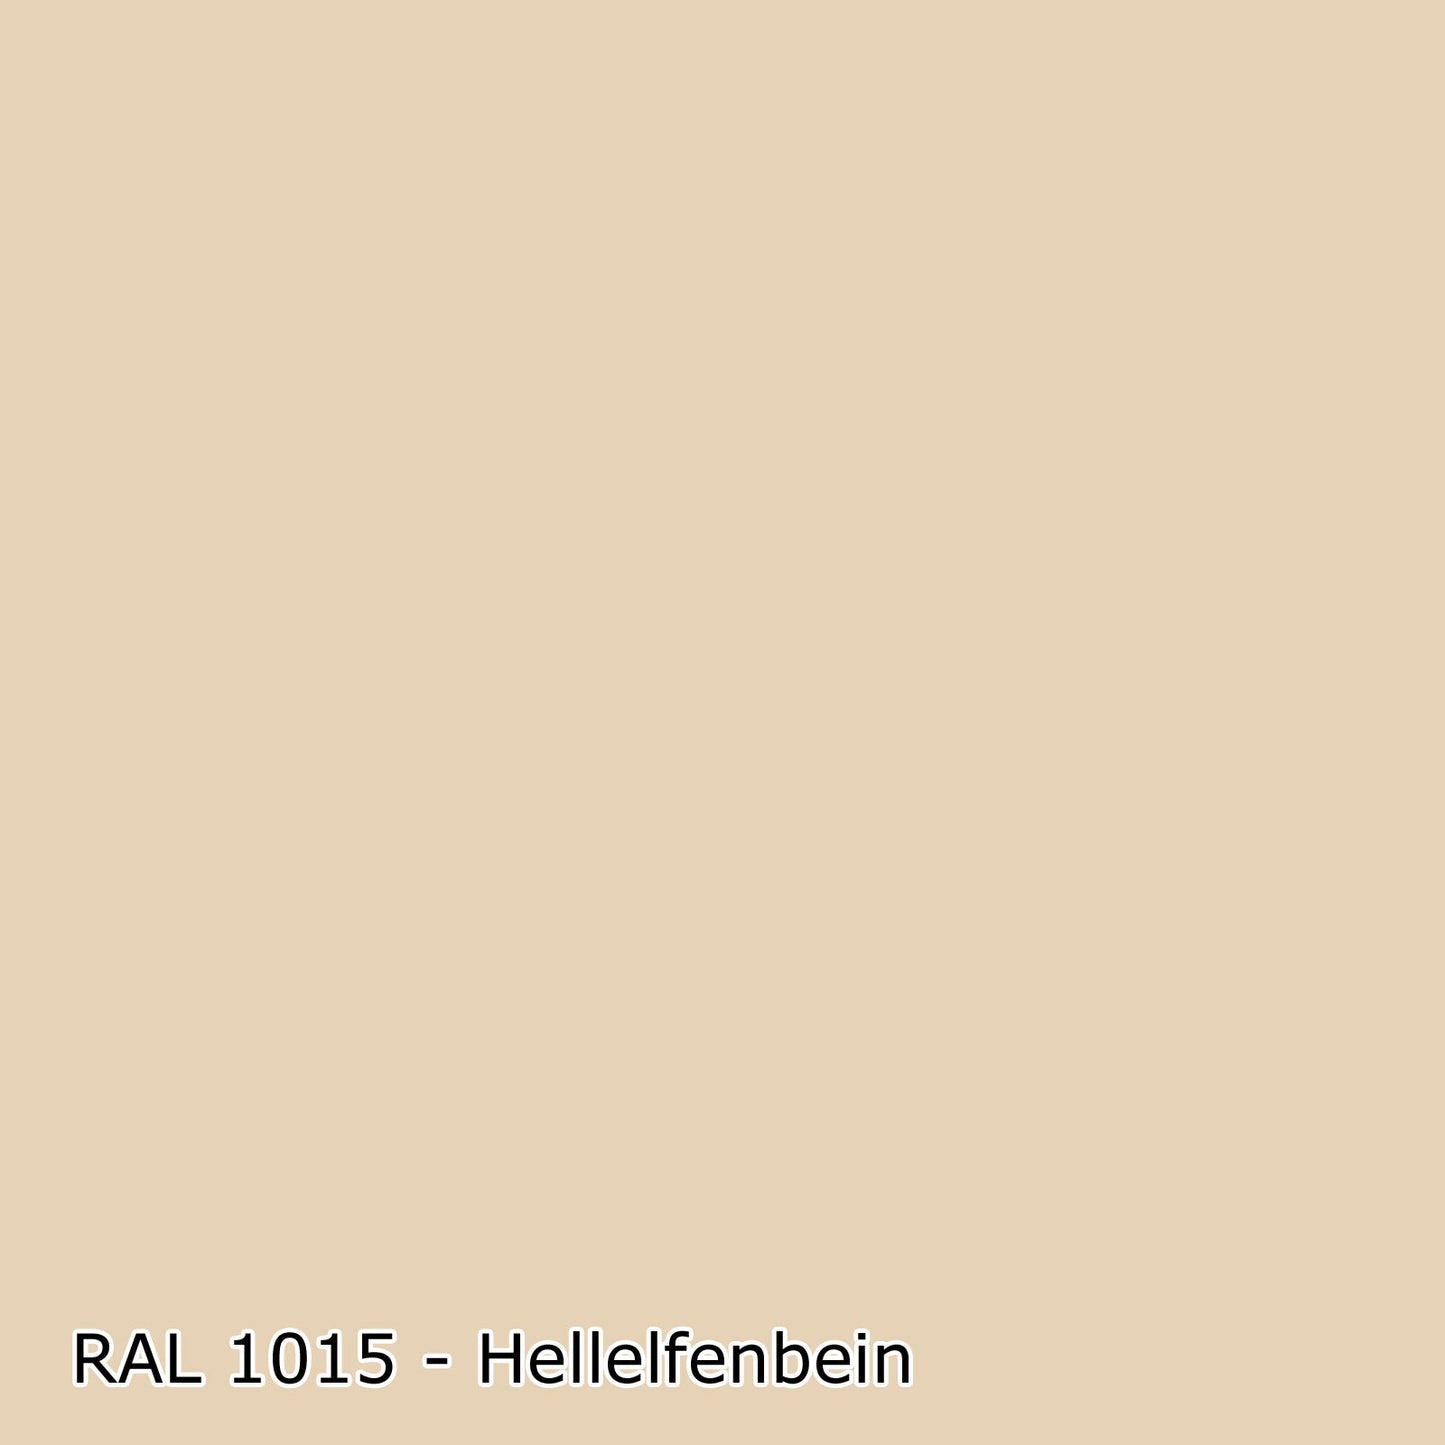 1 L Buntlack, Kunstharzlack, RAL Farbwahl - SEIDENGLANZ (RAL 1000 - 6006)